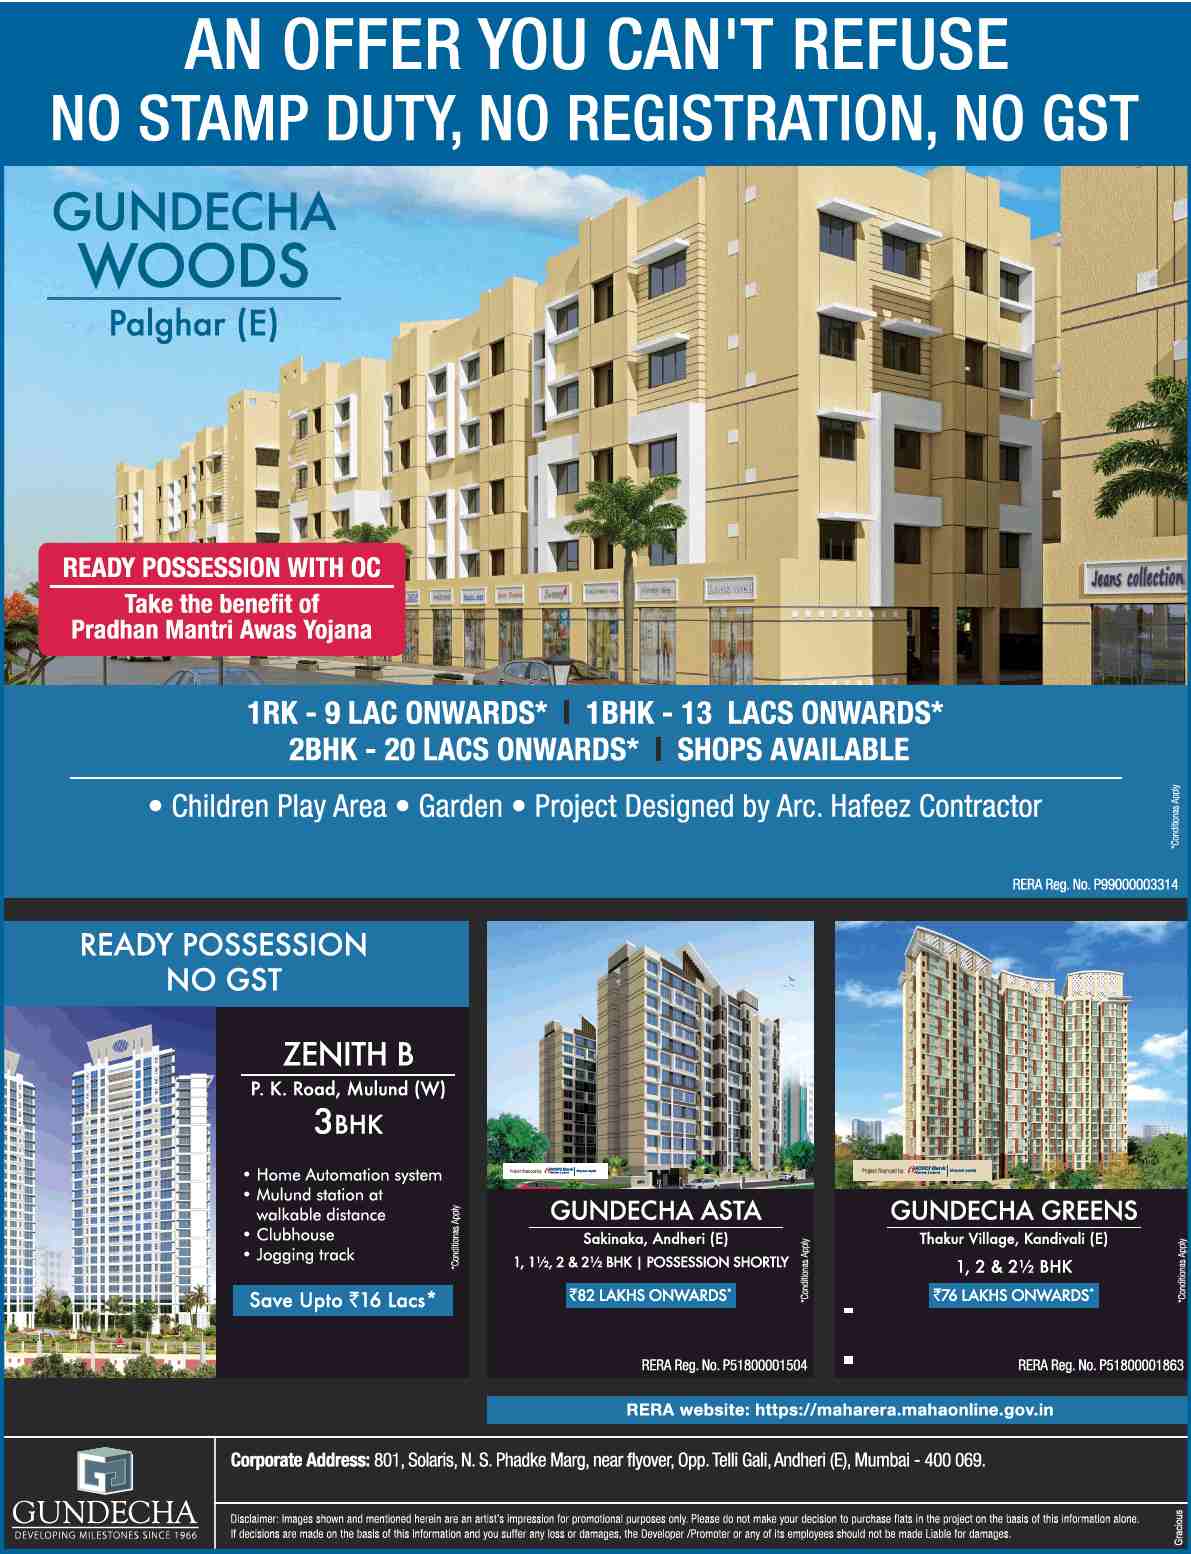 Invest in Gundecha properties in Mumbai Update